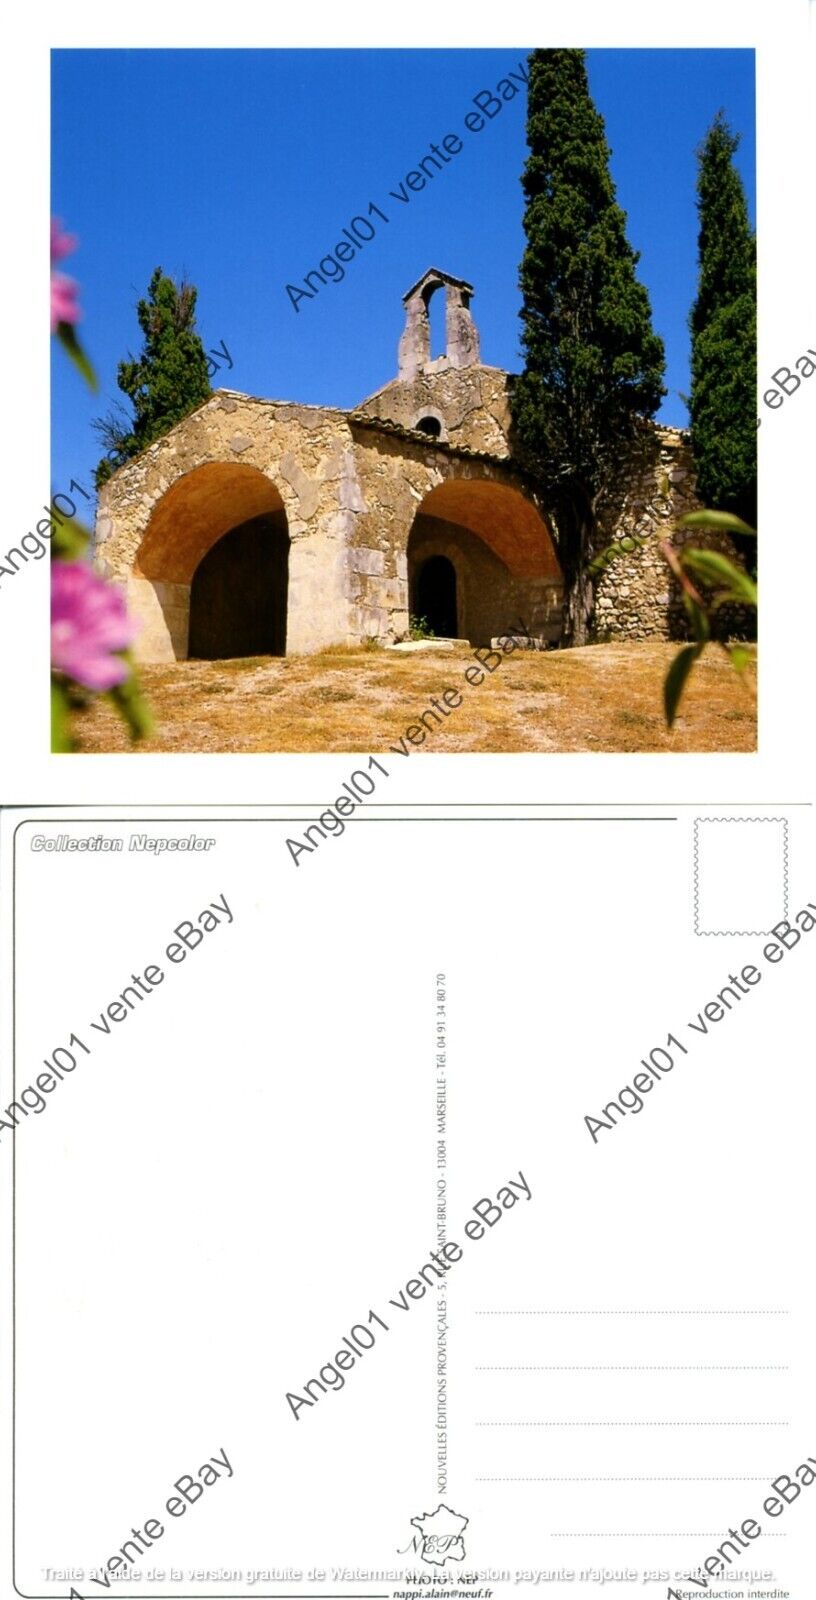 Provence theme postcard NEP square 15x15cm chapel